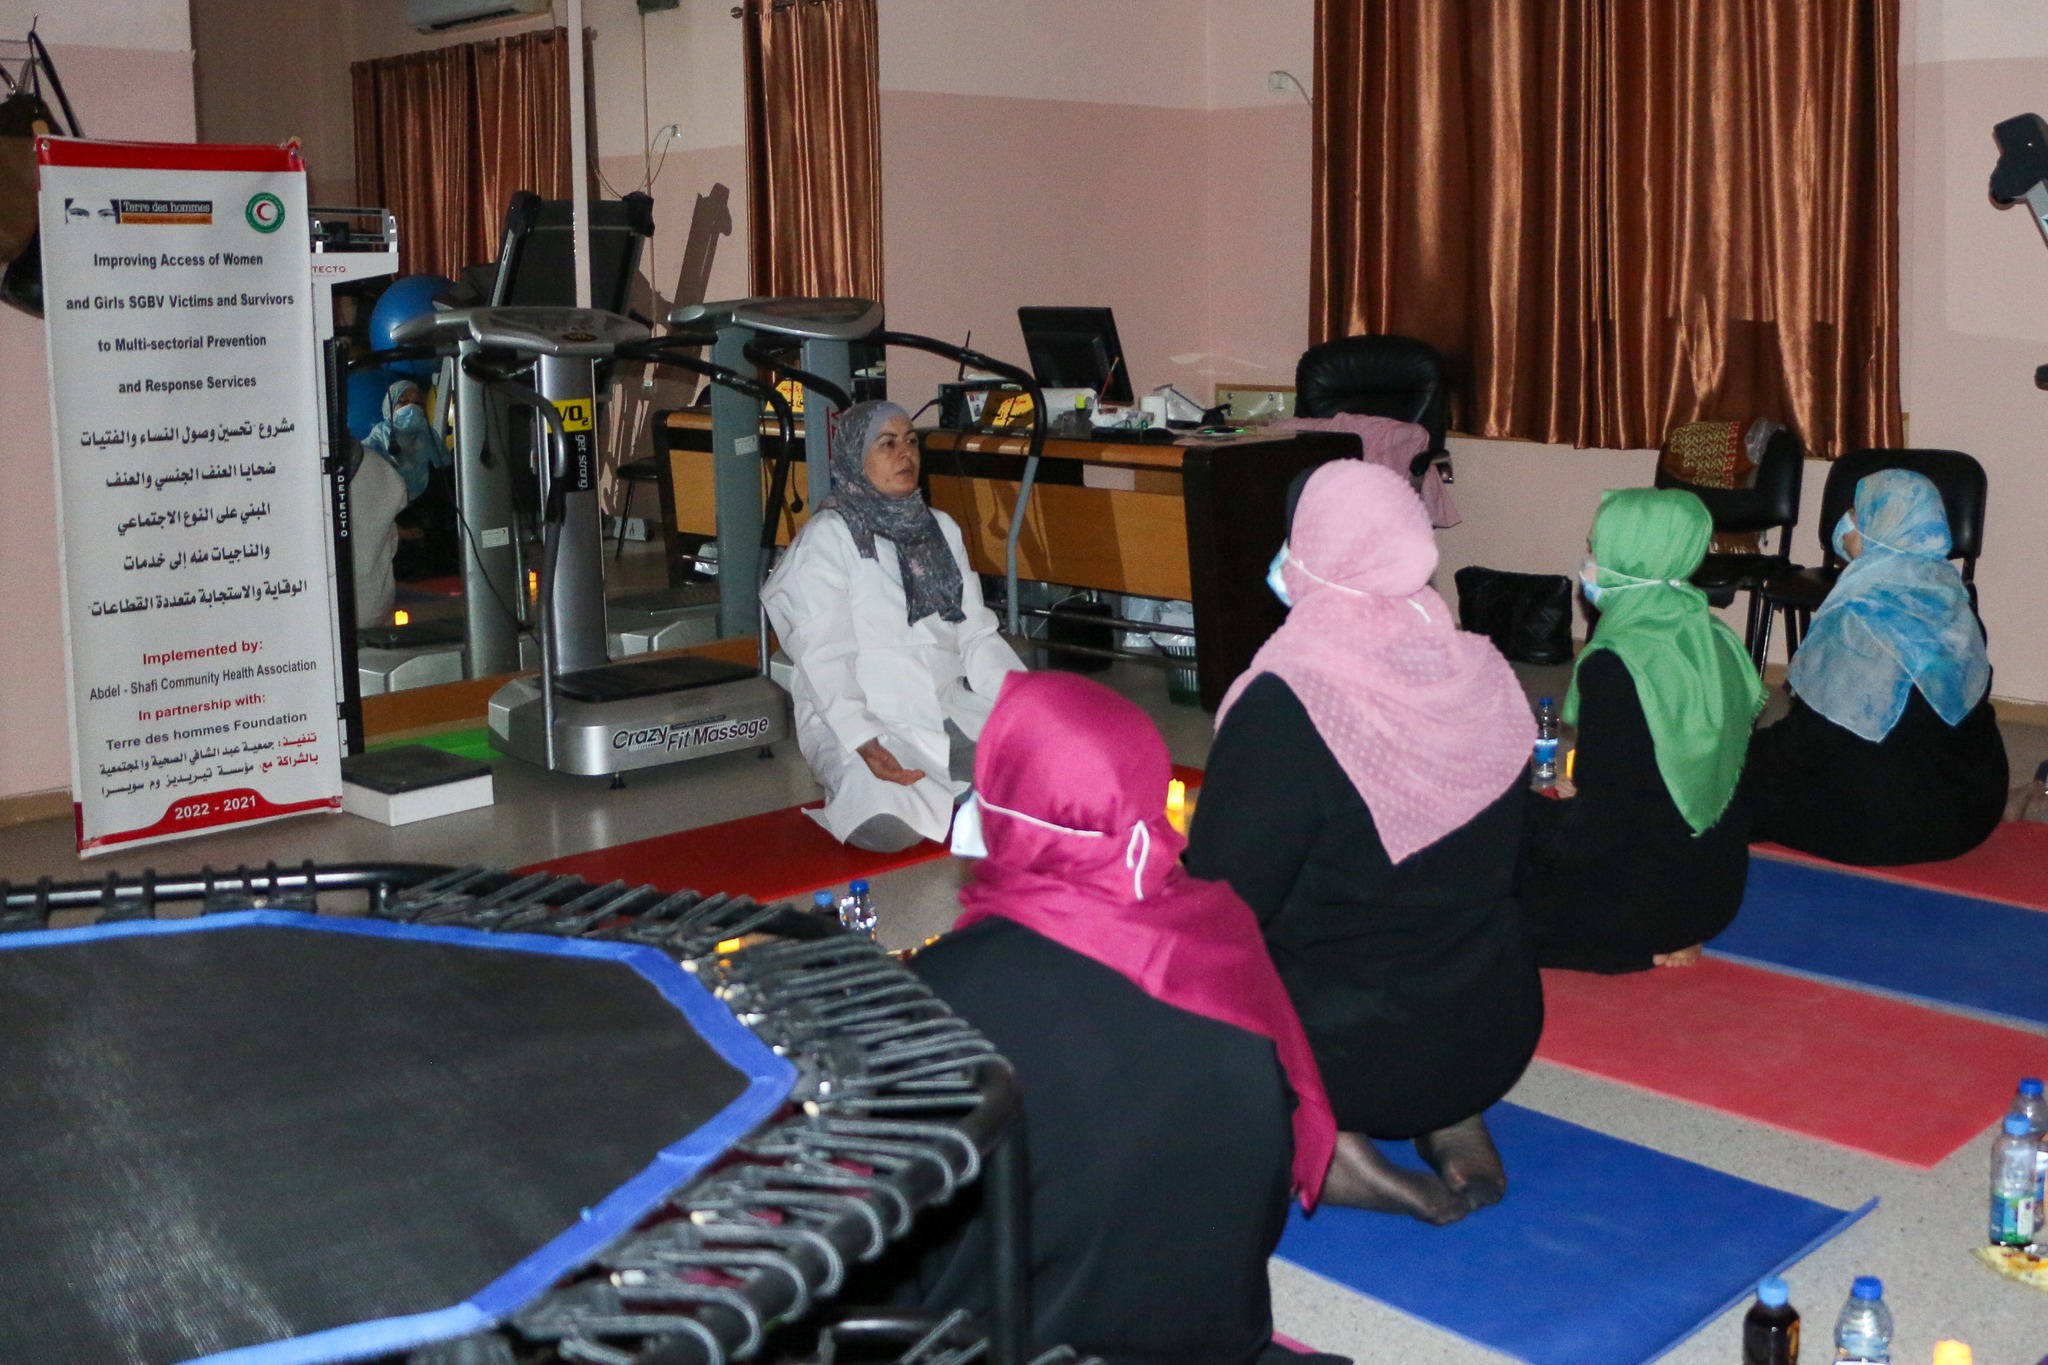 photo showing women kneeling on mats for yoga class